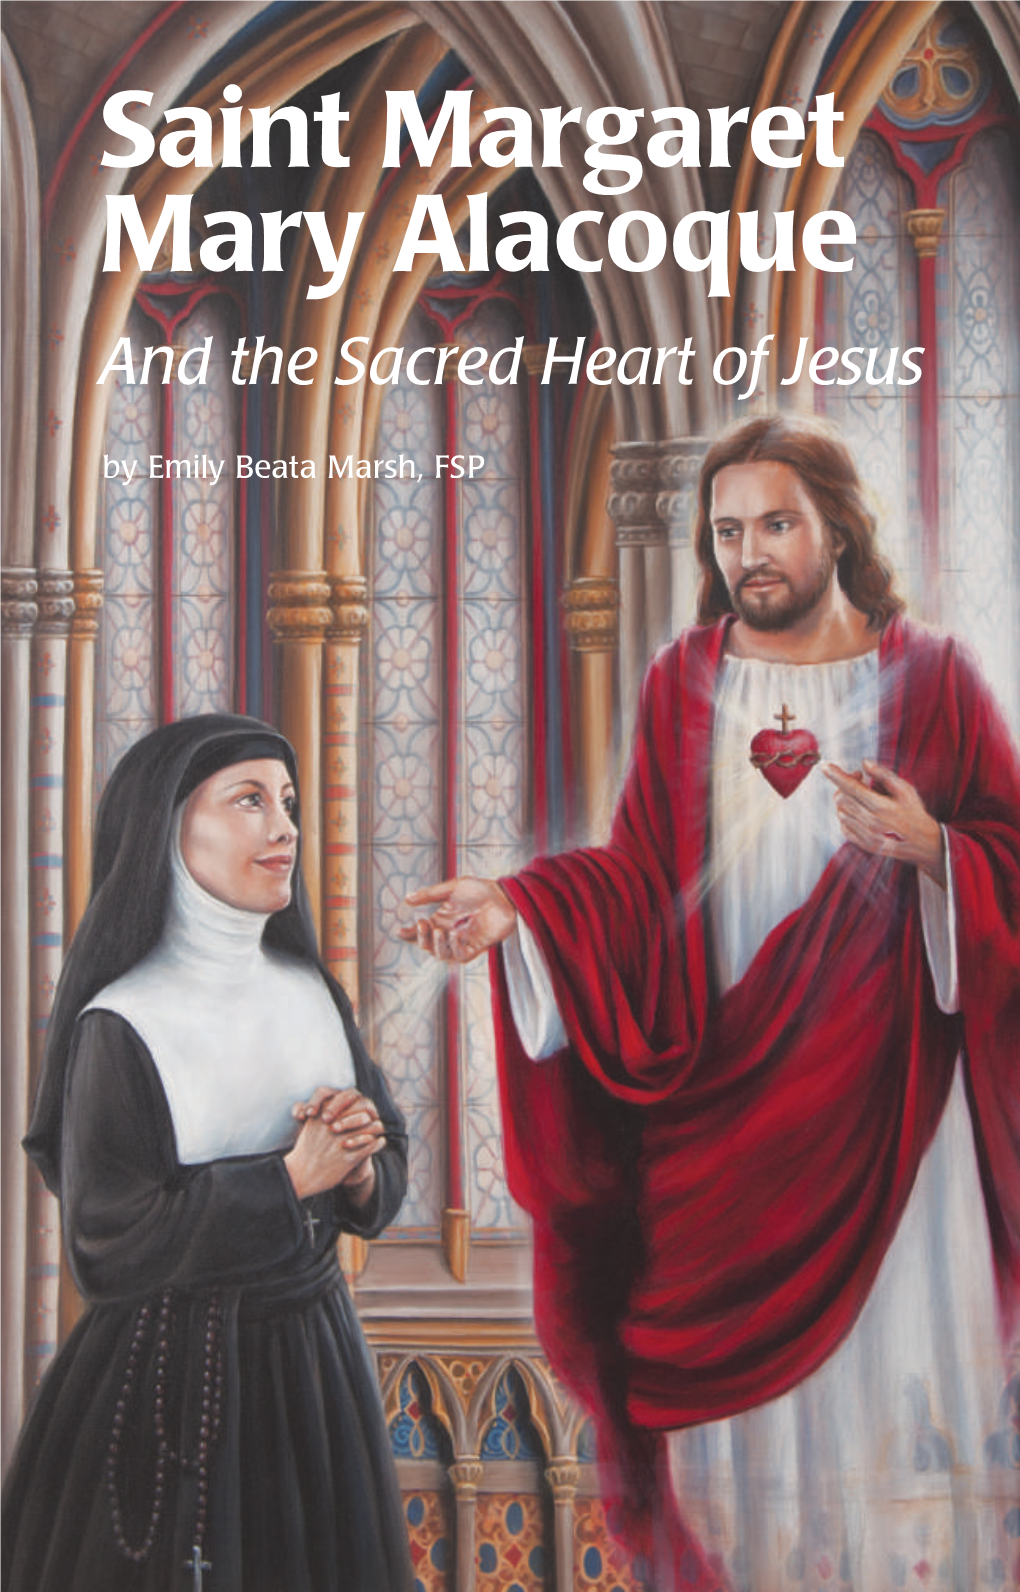 Saint Margaret Mary Alacoque “You Will Love People Like I Do